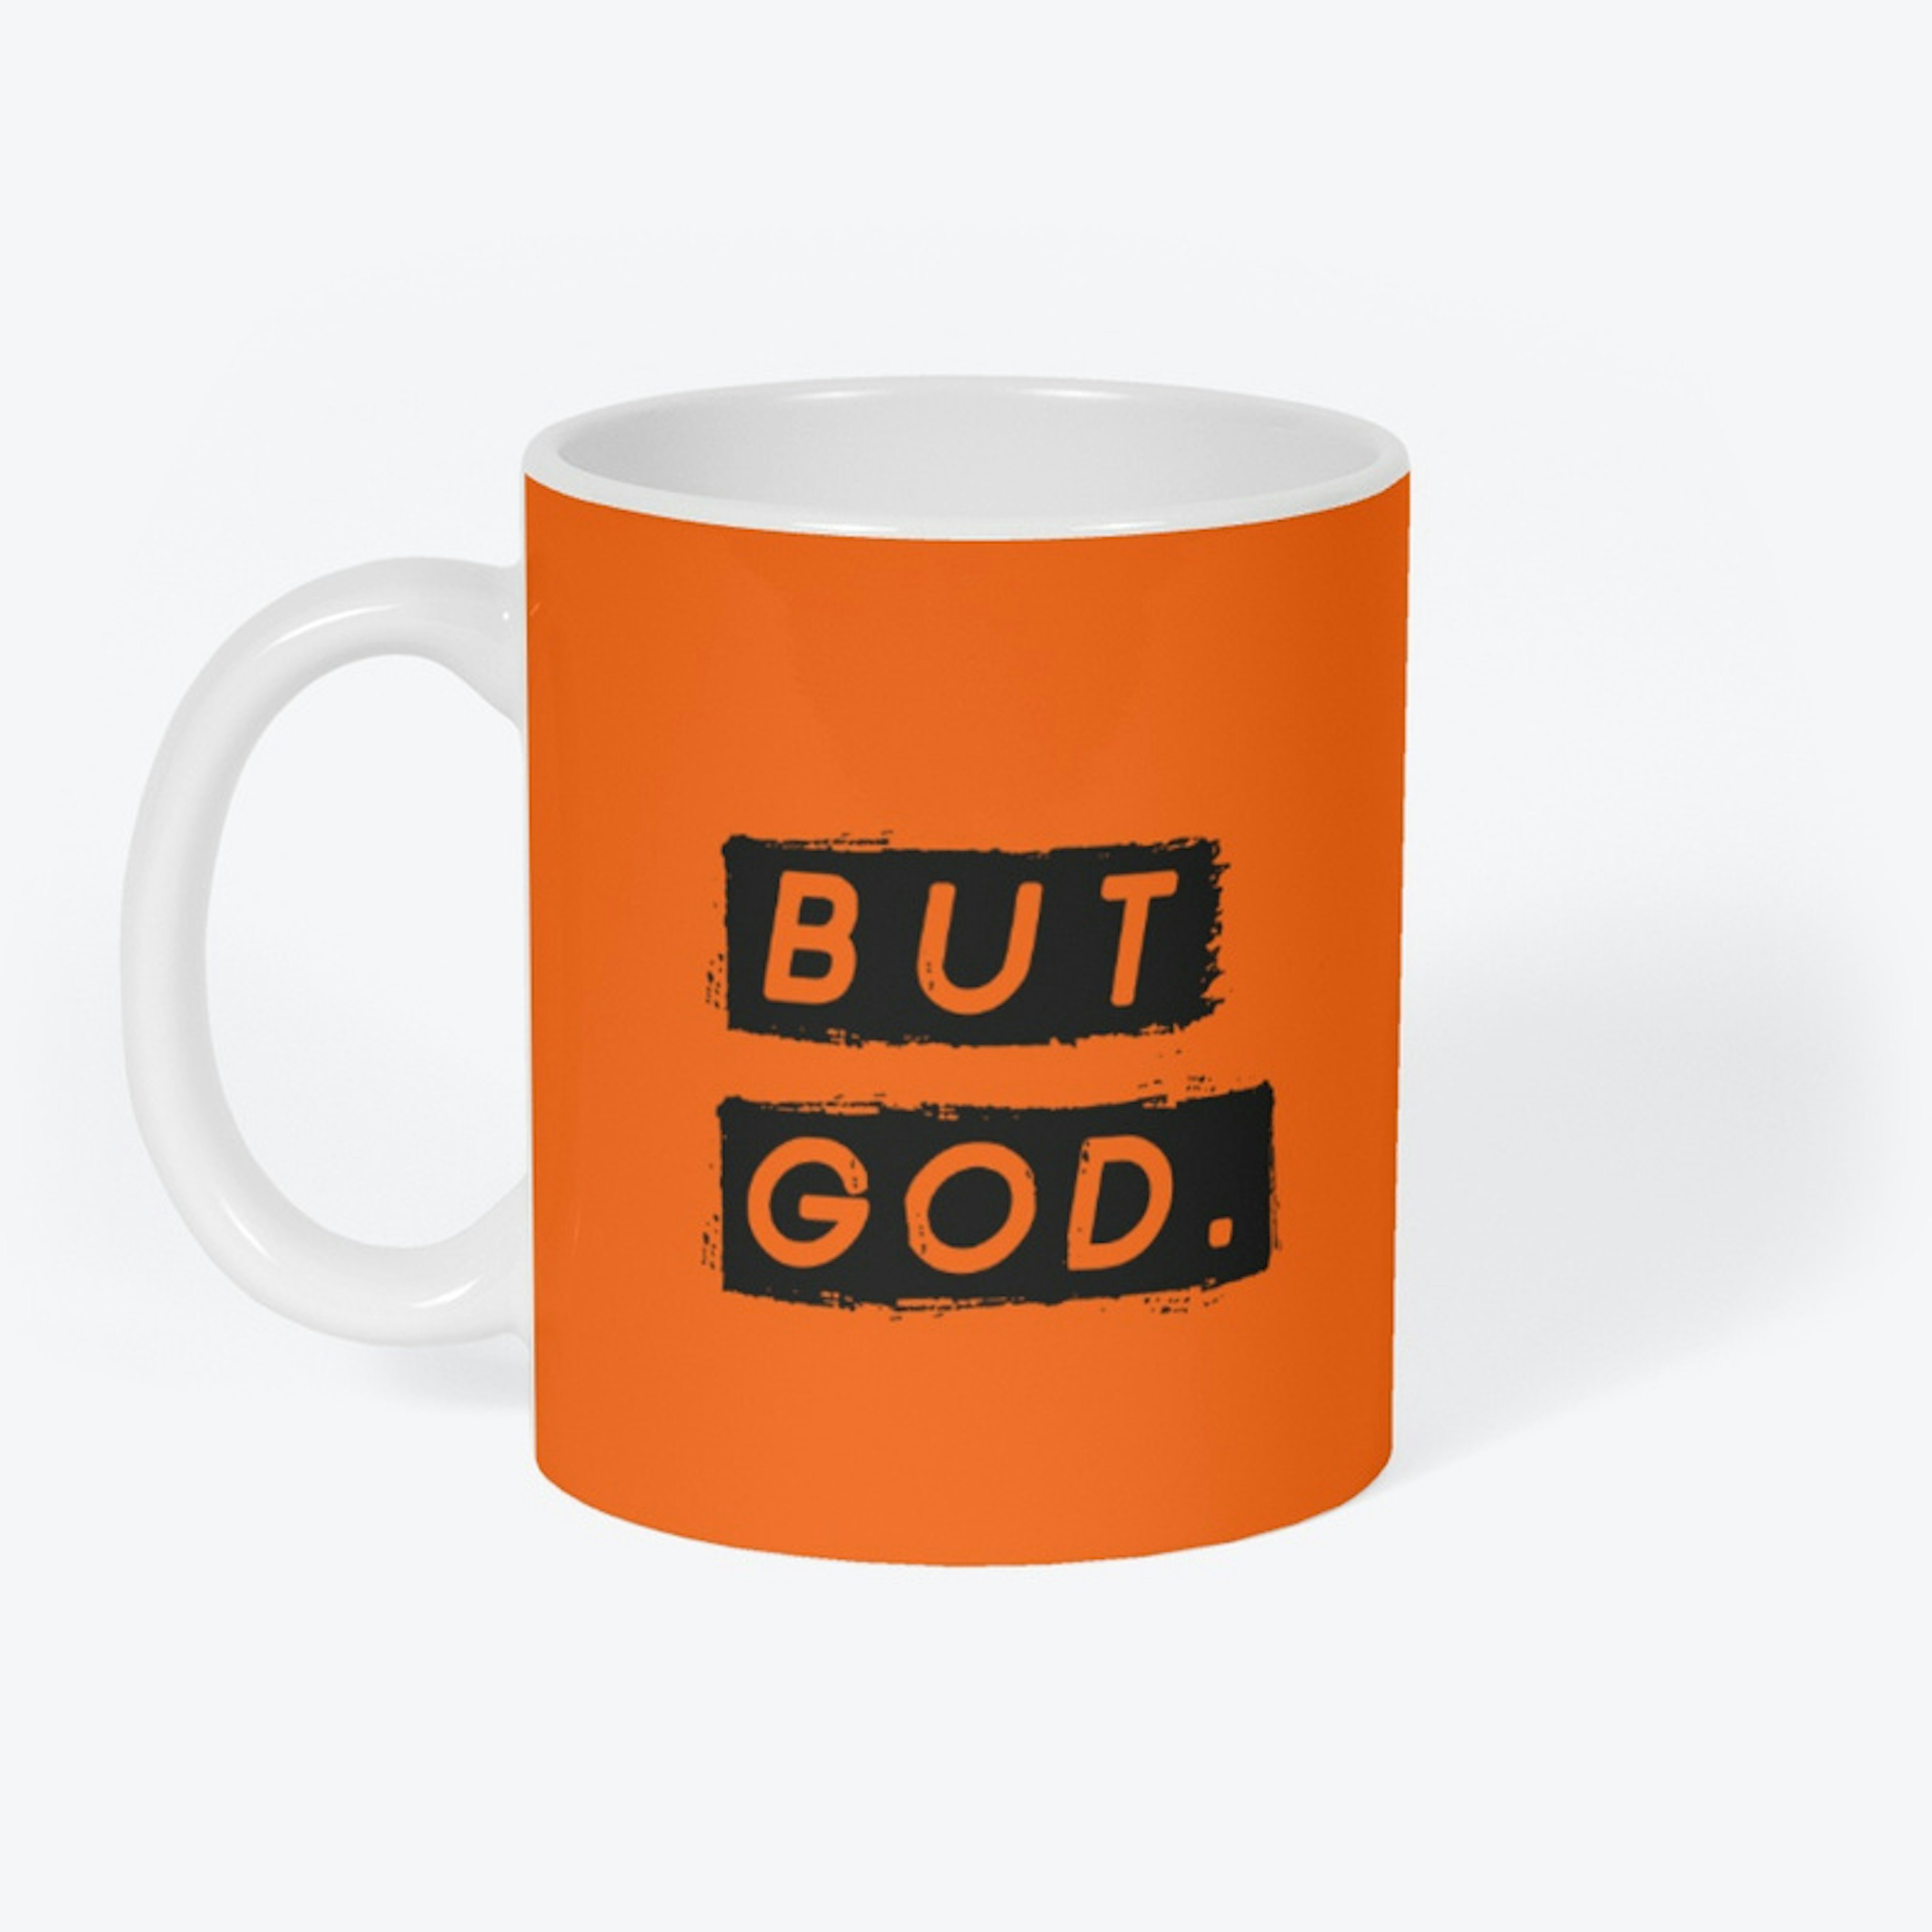 BUT GOD. Mug